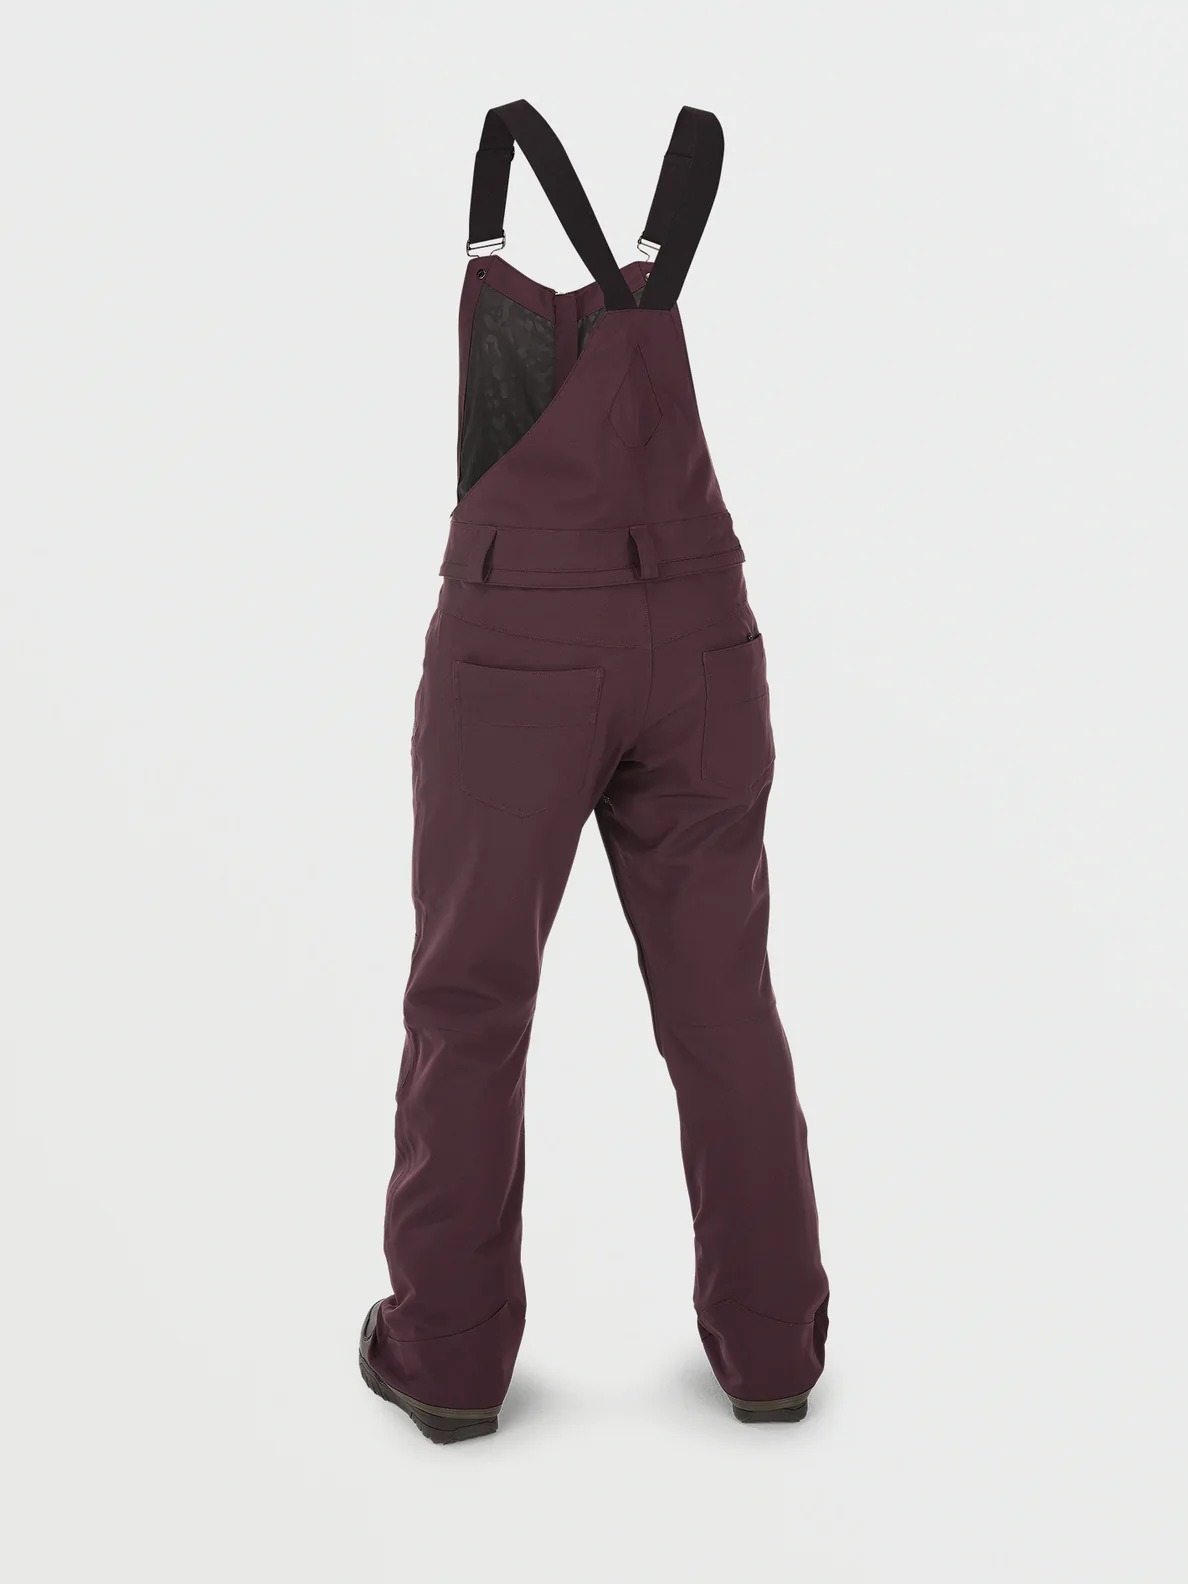 Штаны для сноуборда Volcom 22-23 Swift Bib Overall Black Plum, цвет бордовый, размер L 1352311 - фото 2